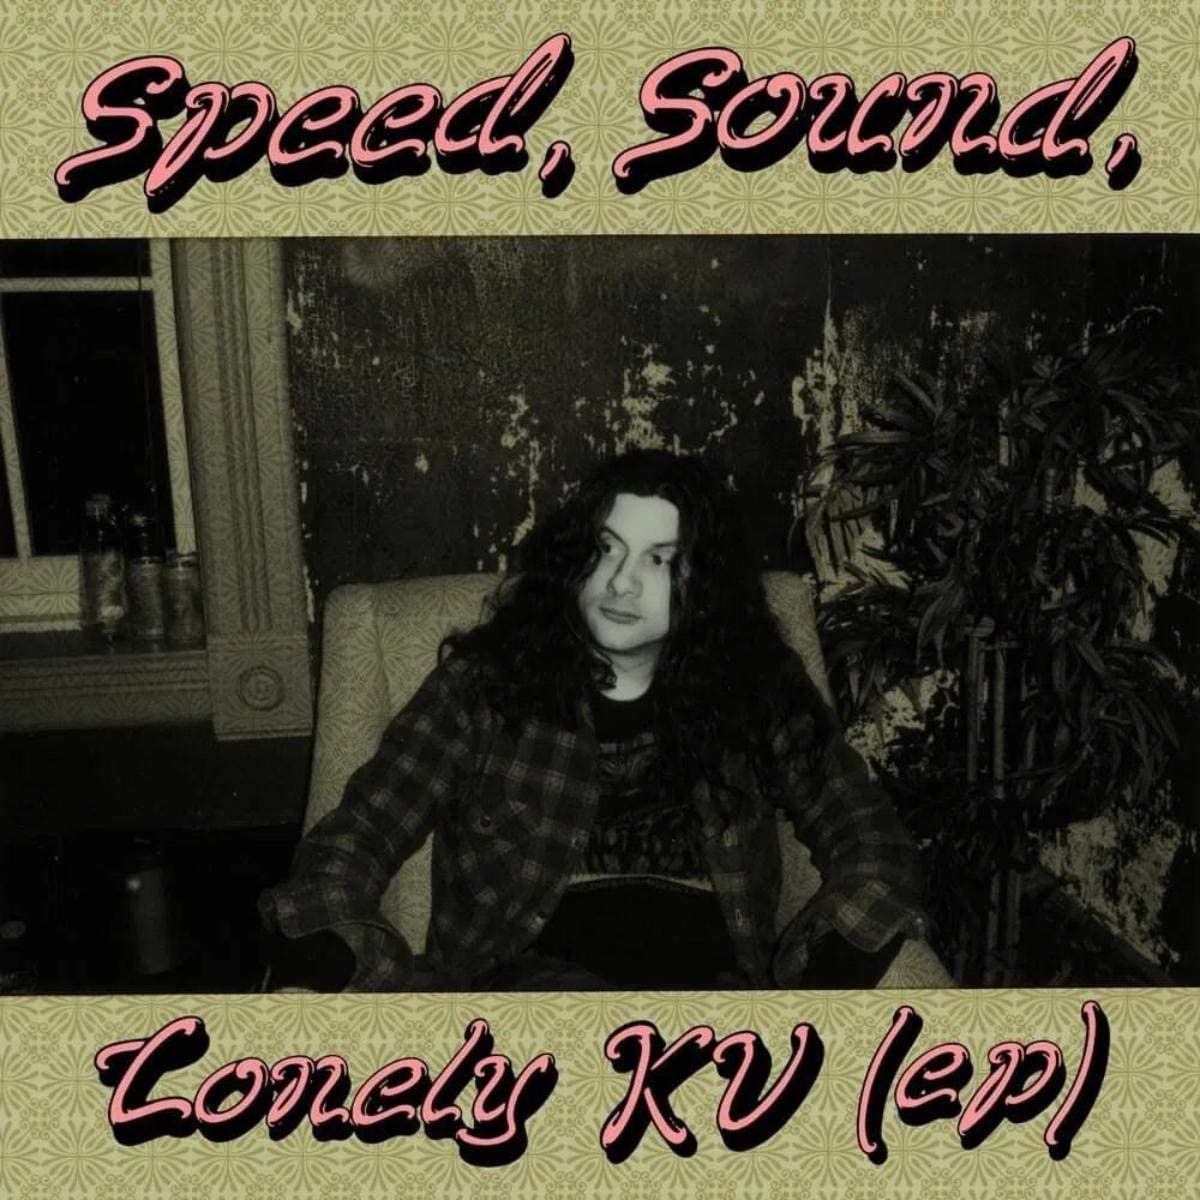 Vile, Kurt/Speed, Sound, Lonely KV [12"]